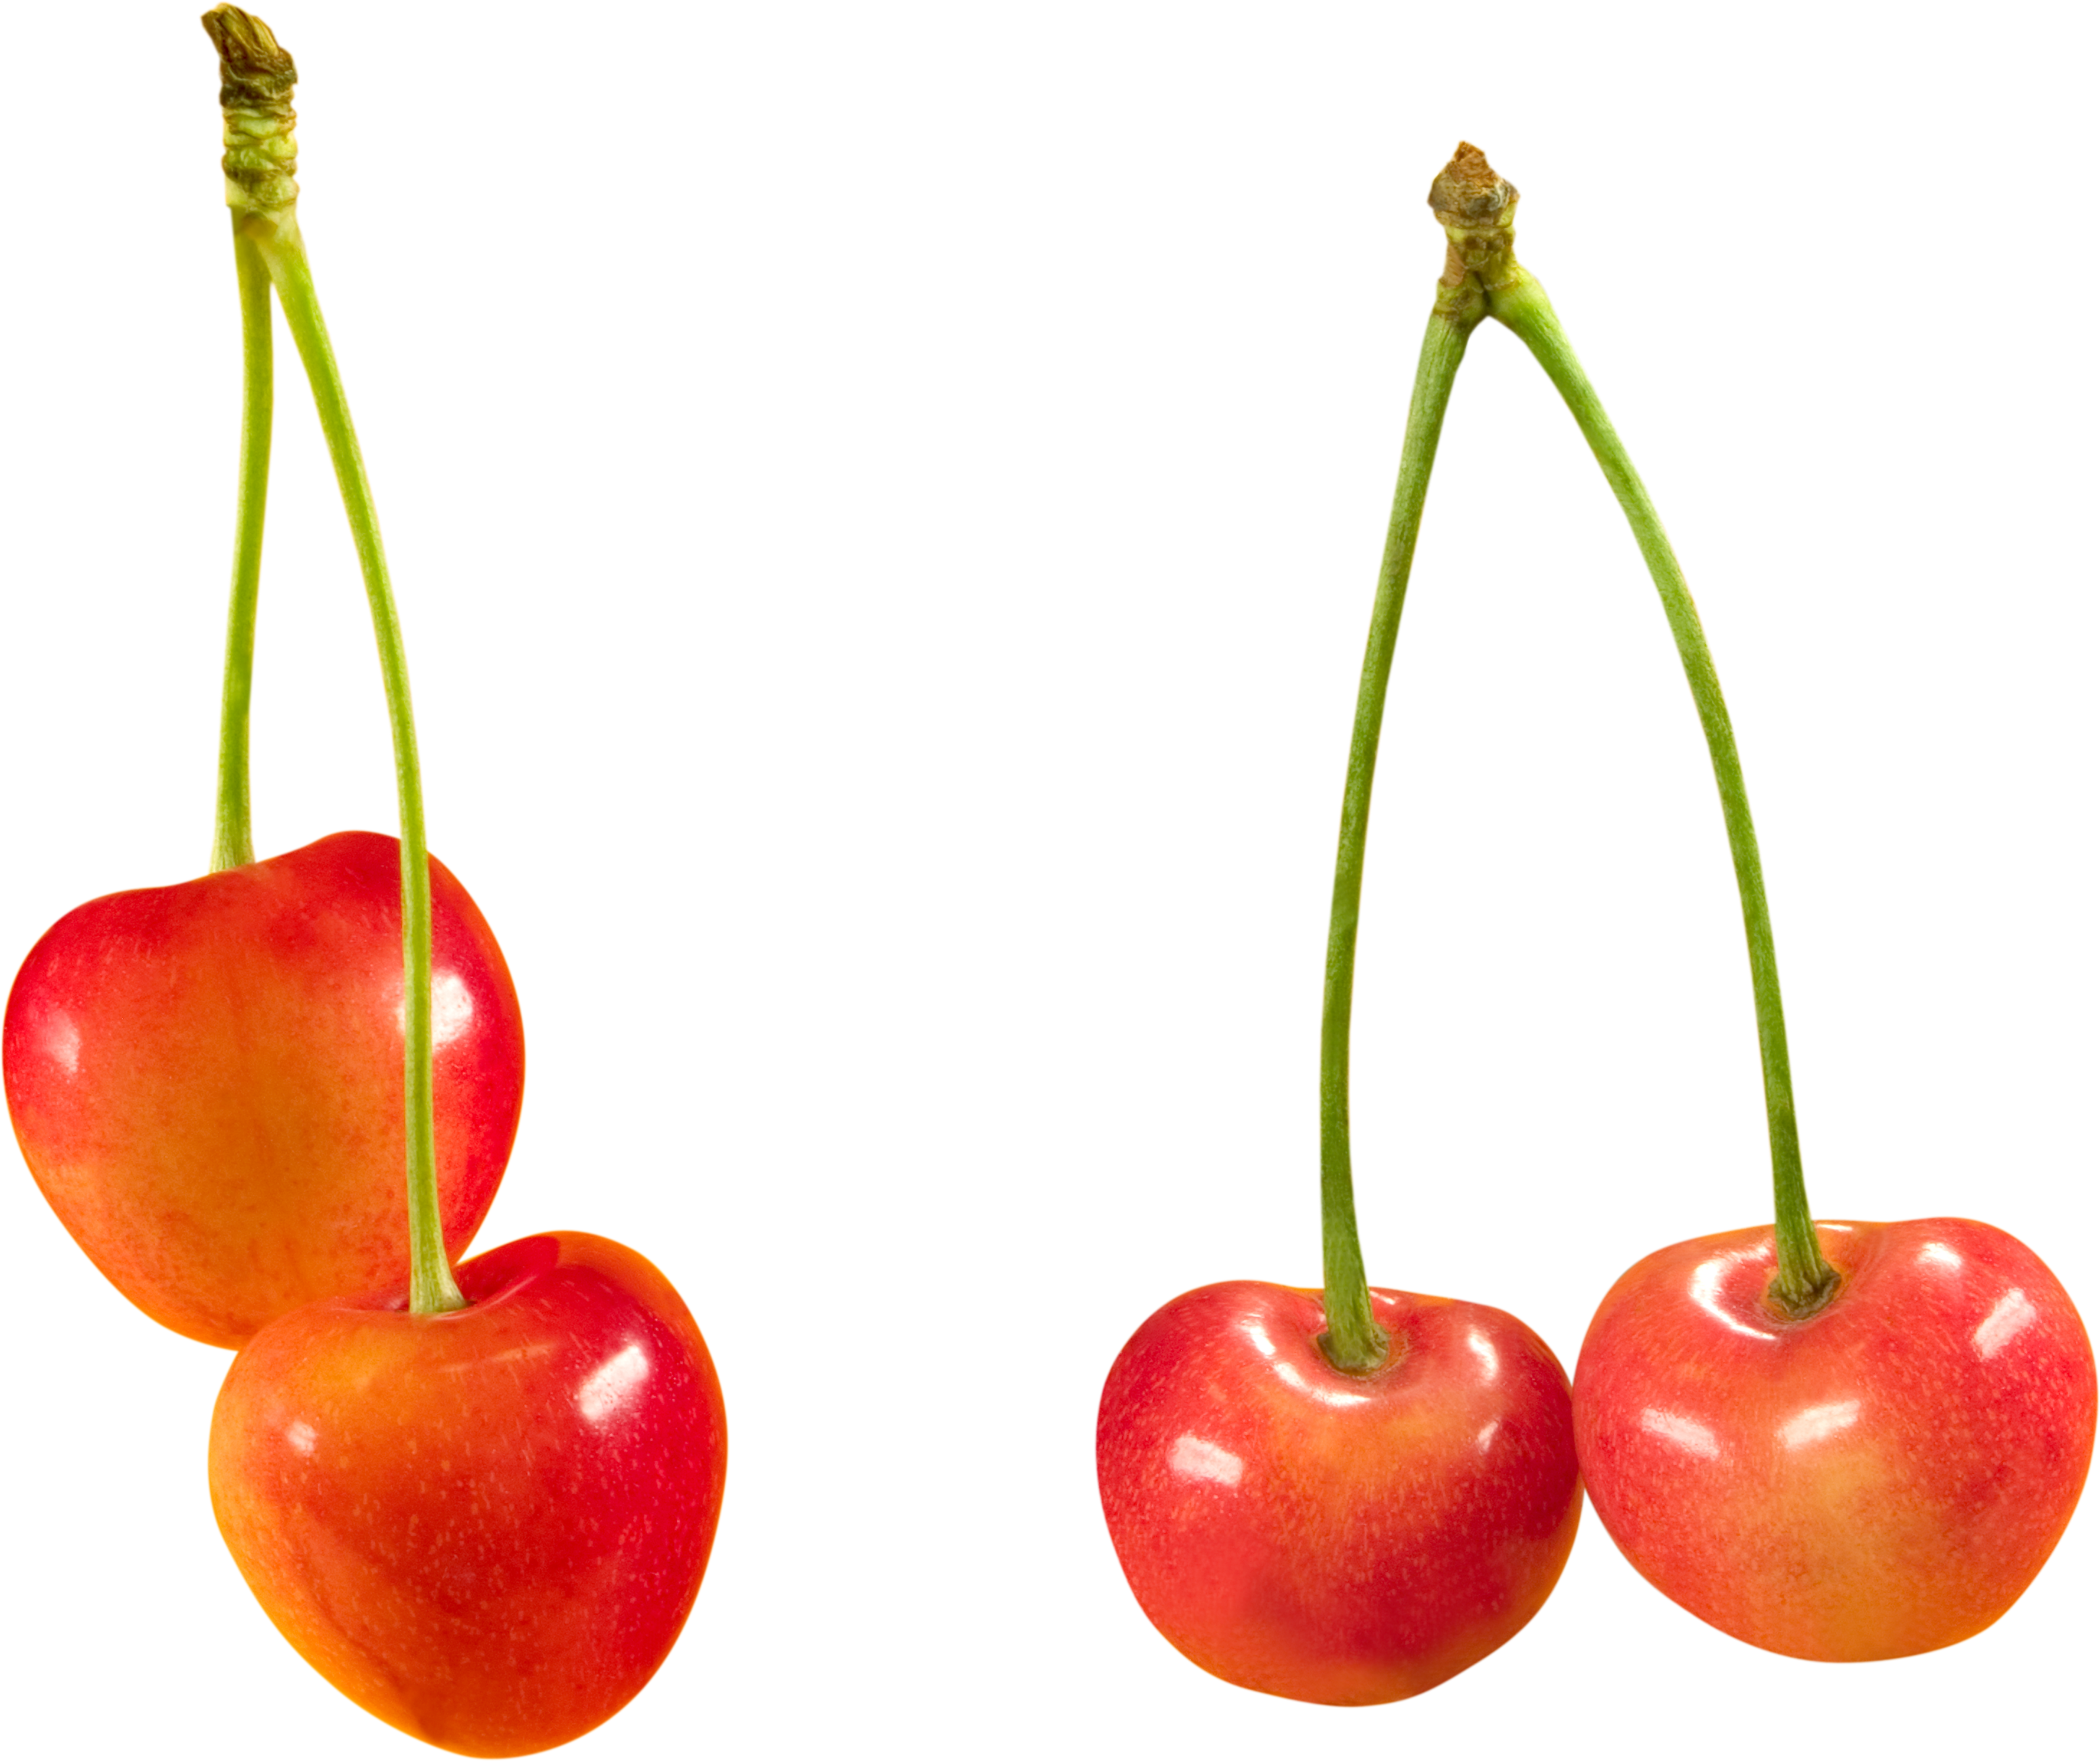 Cherries PNG Image